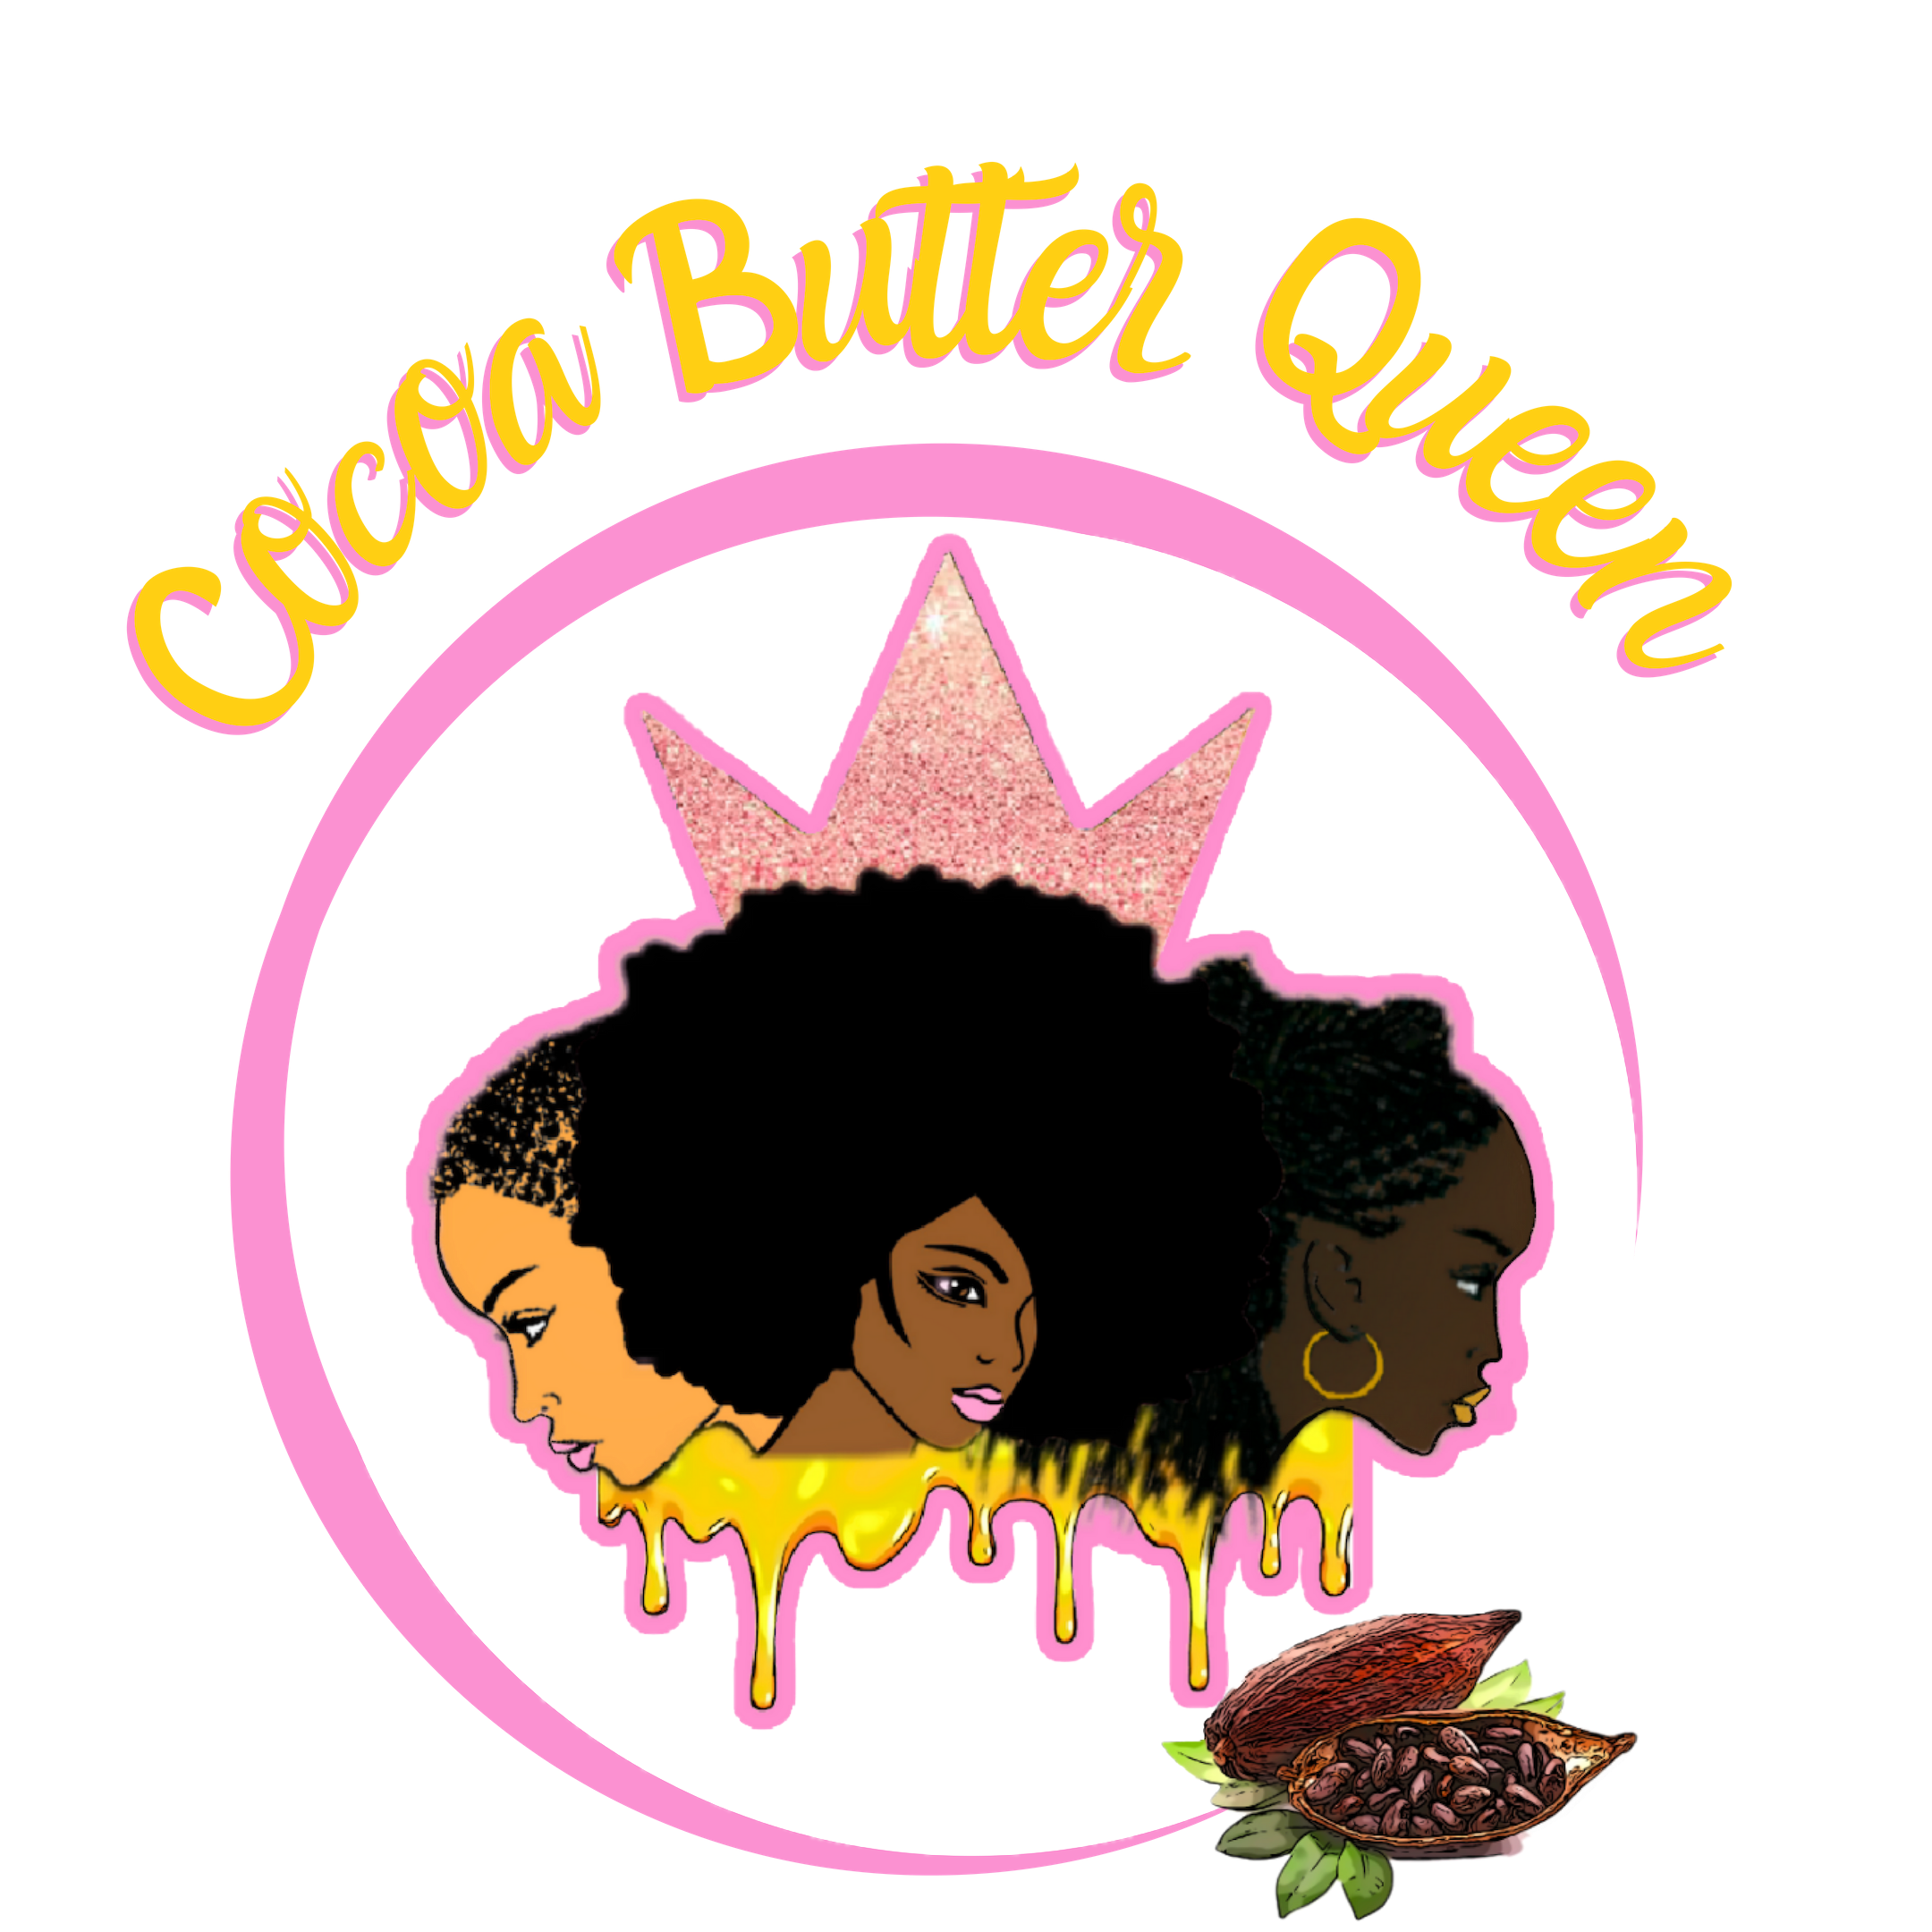 Cocoa Butter Queen